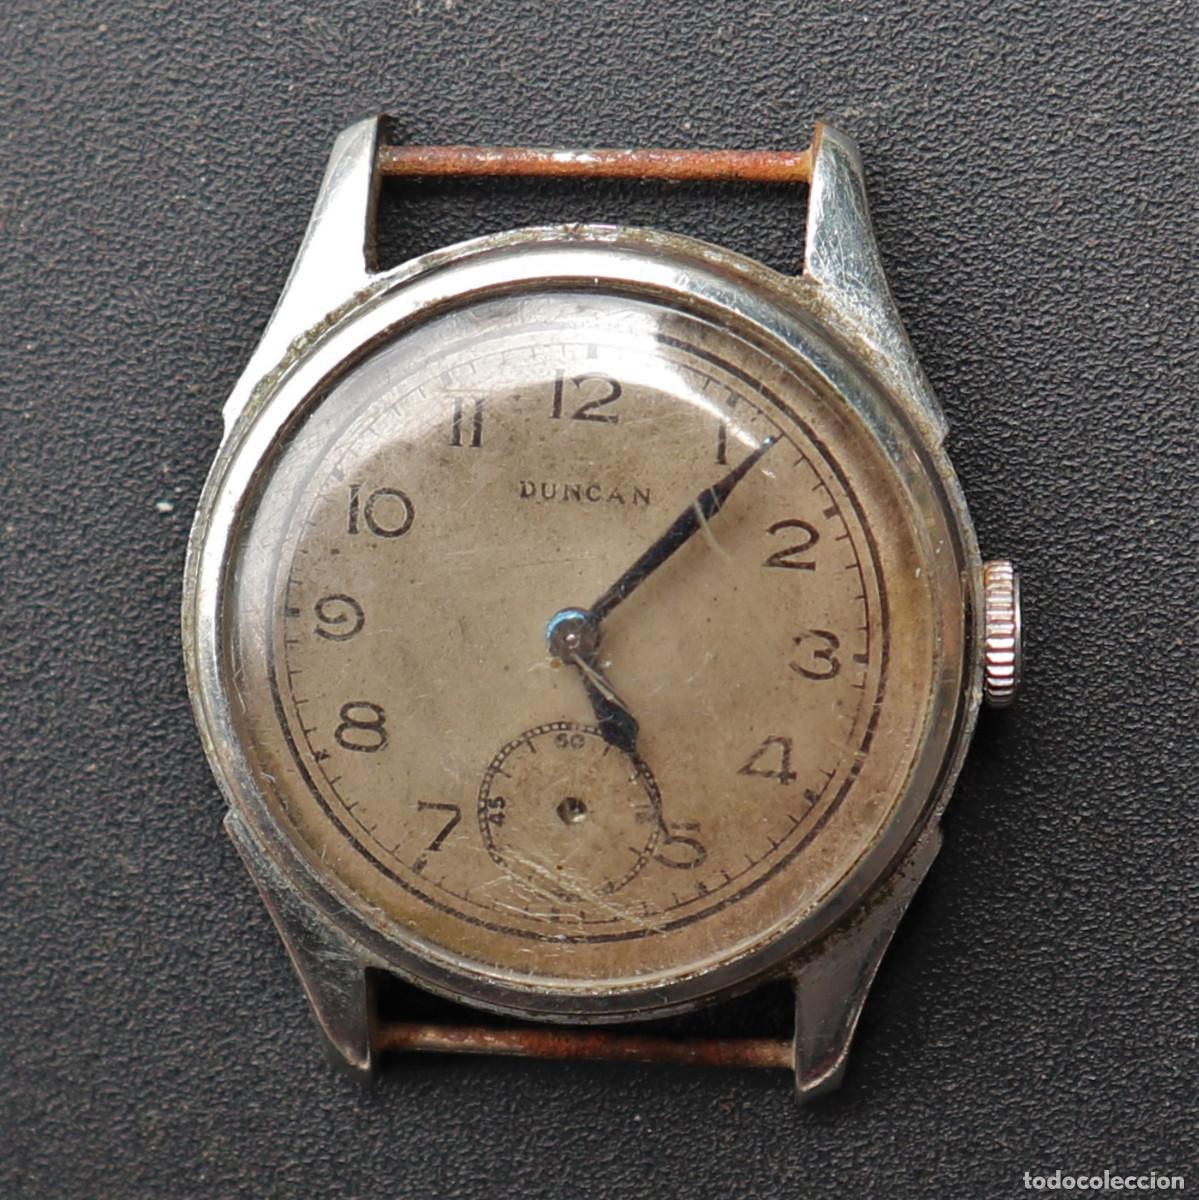 duncan watch co. para c. coppel. reloj de bolsi - Comprar Relógios antigos  de bolso no todocoleccion